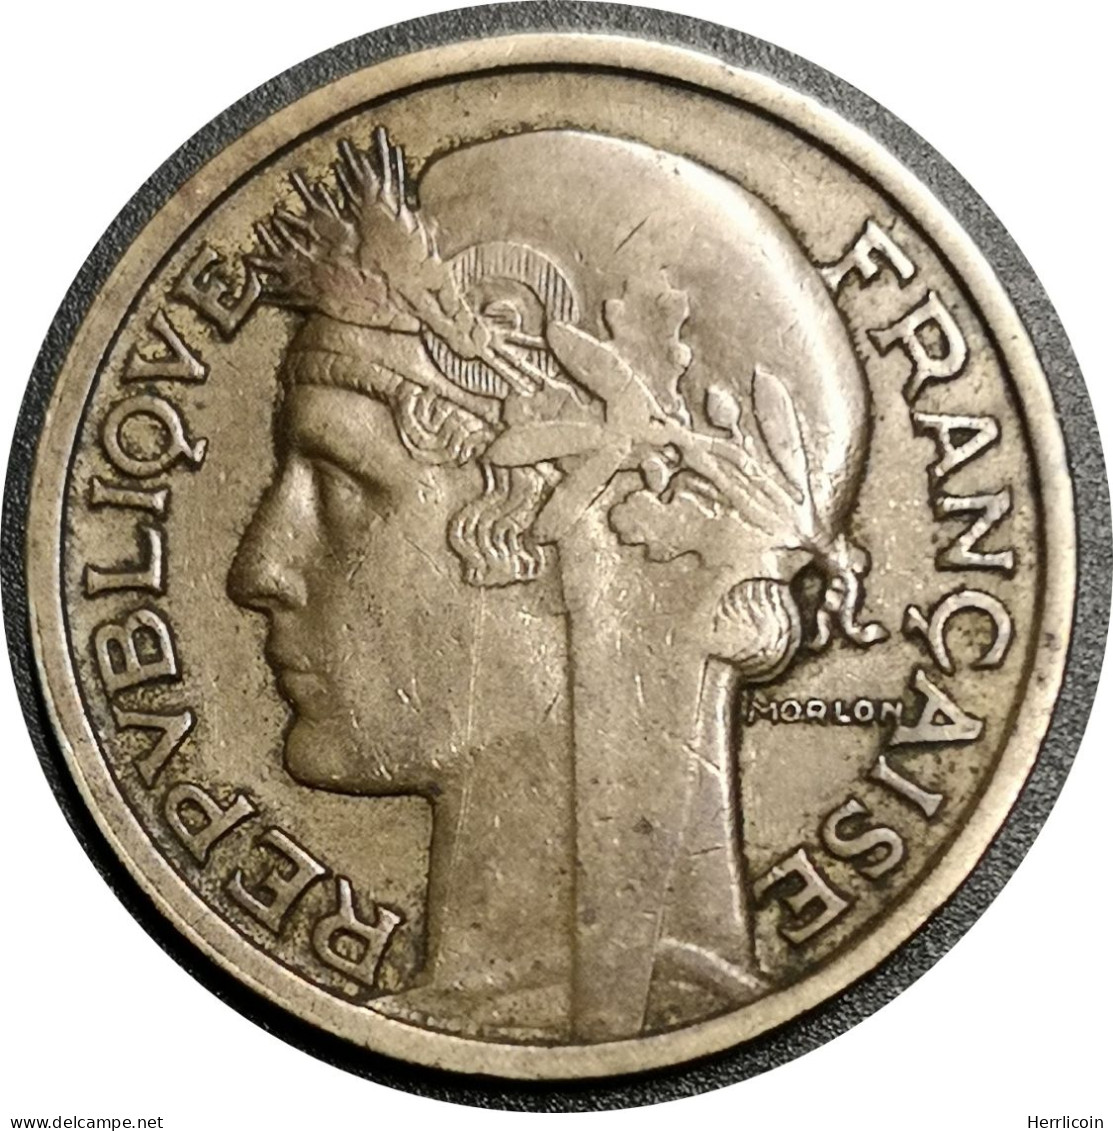 2 Francs 1932 France, Modèle Morlon Cupro - 2 Francs